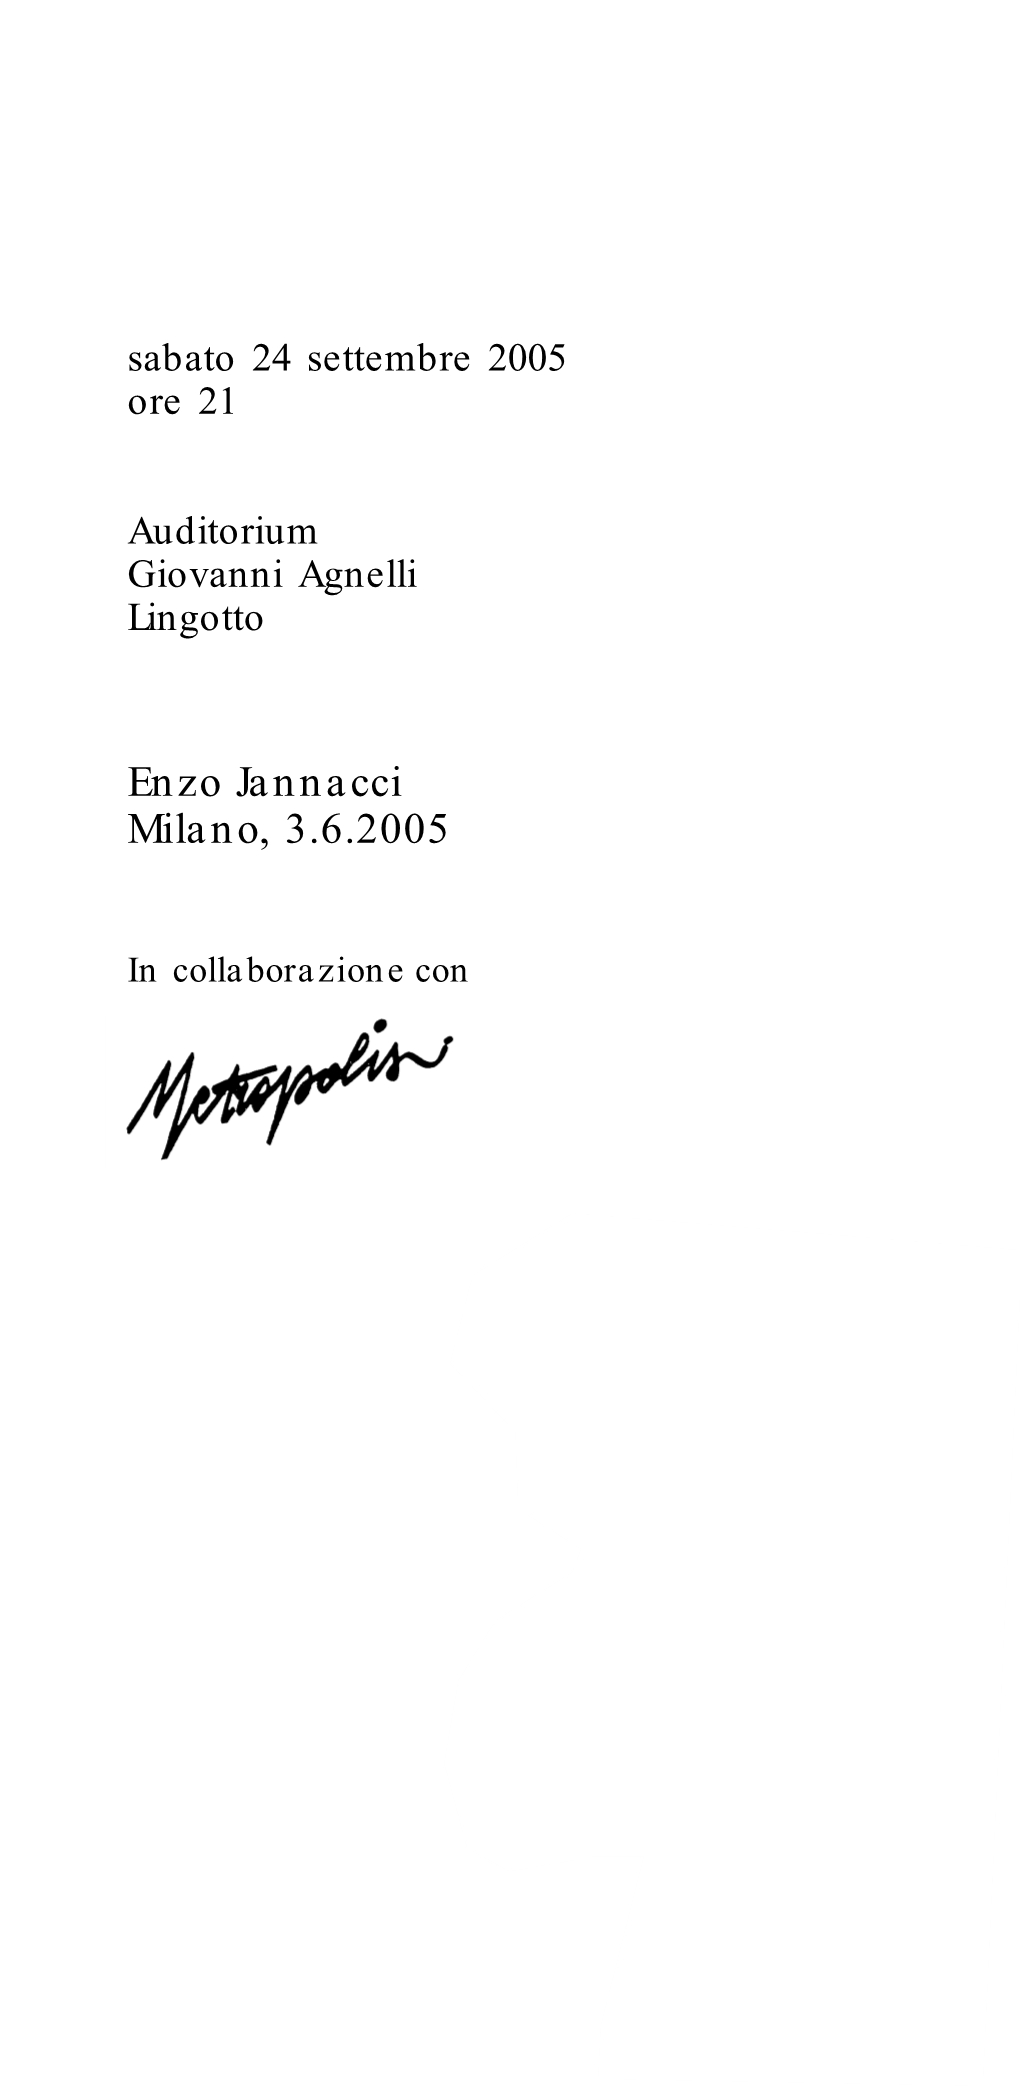 Enzo Jannacci Milano, 3.6.2005